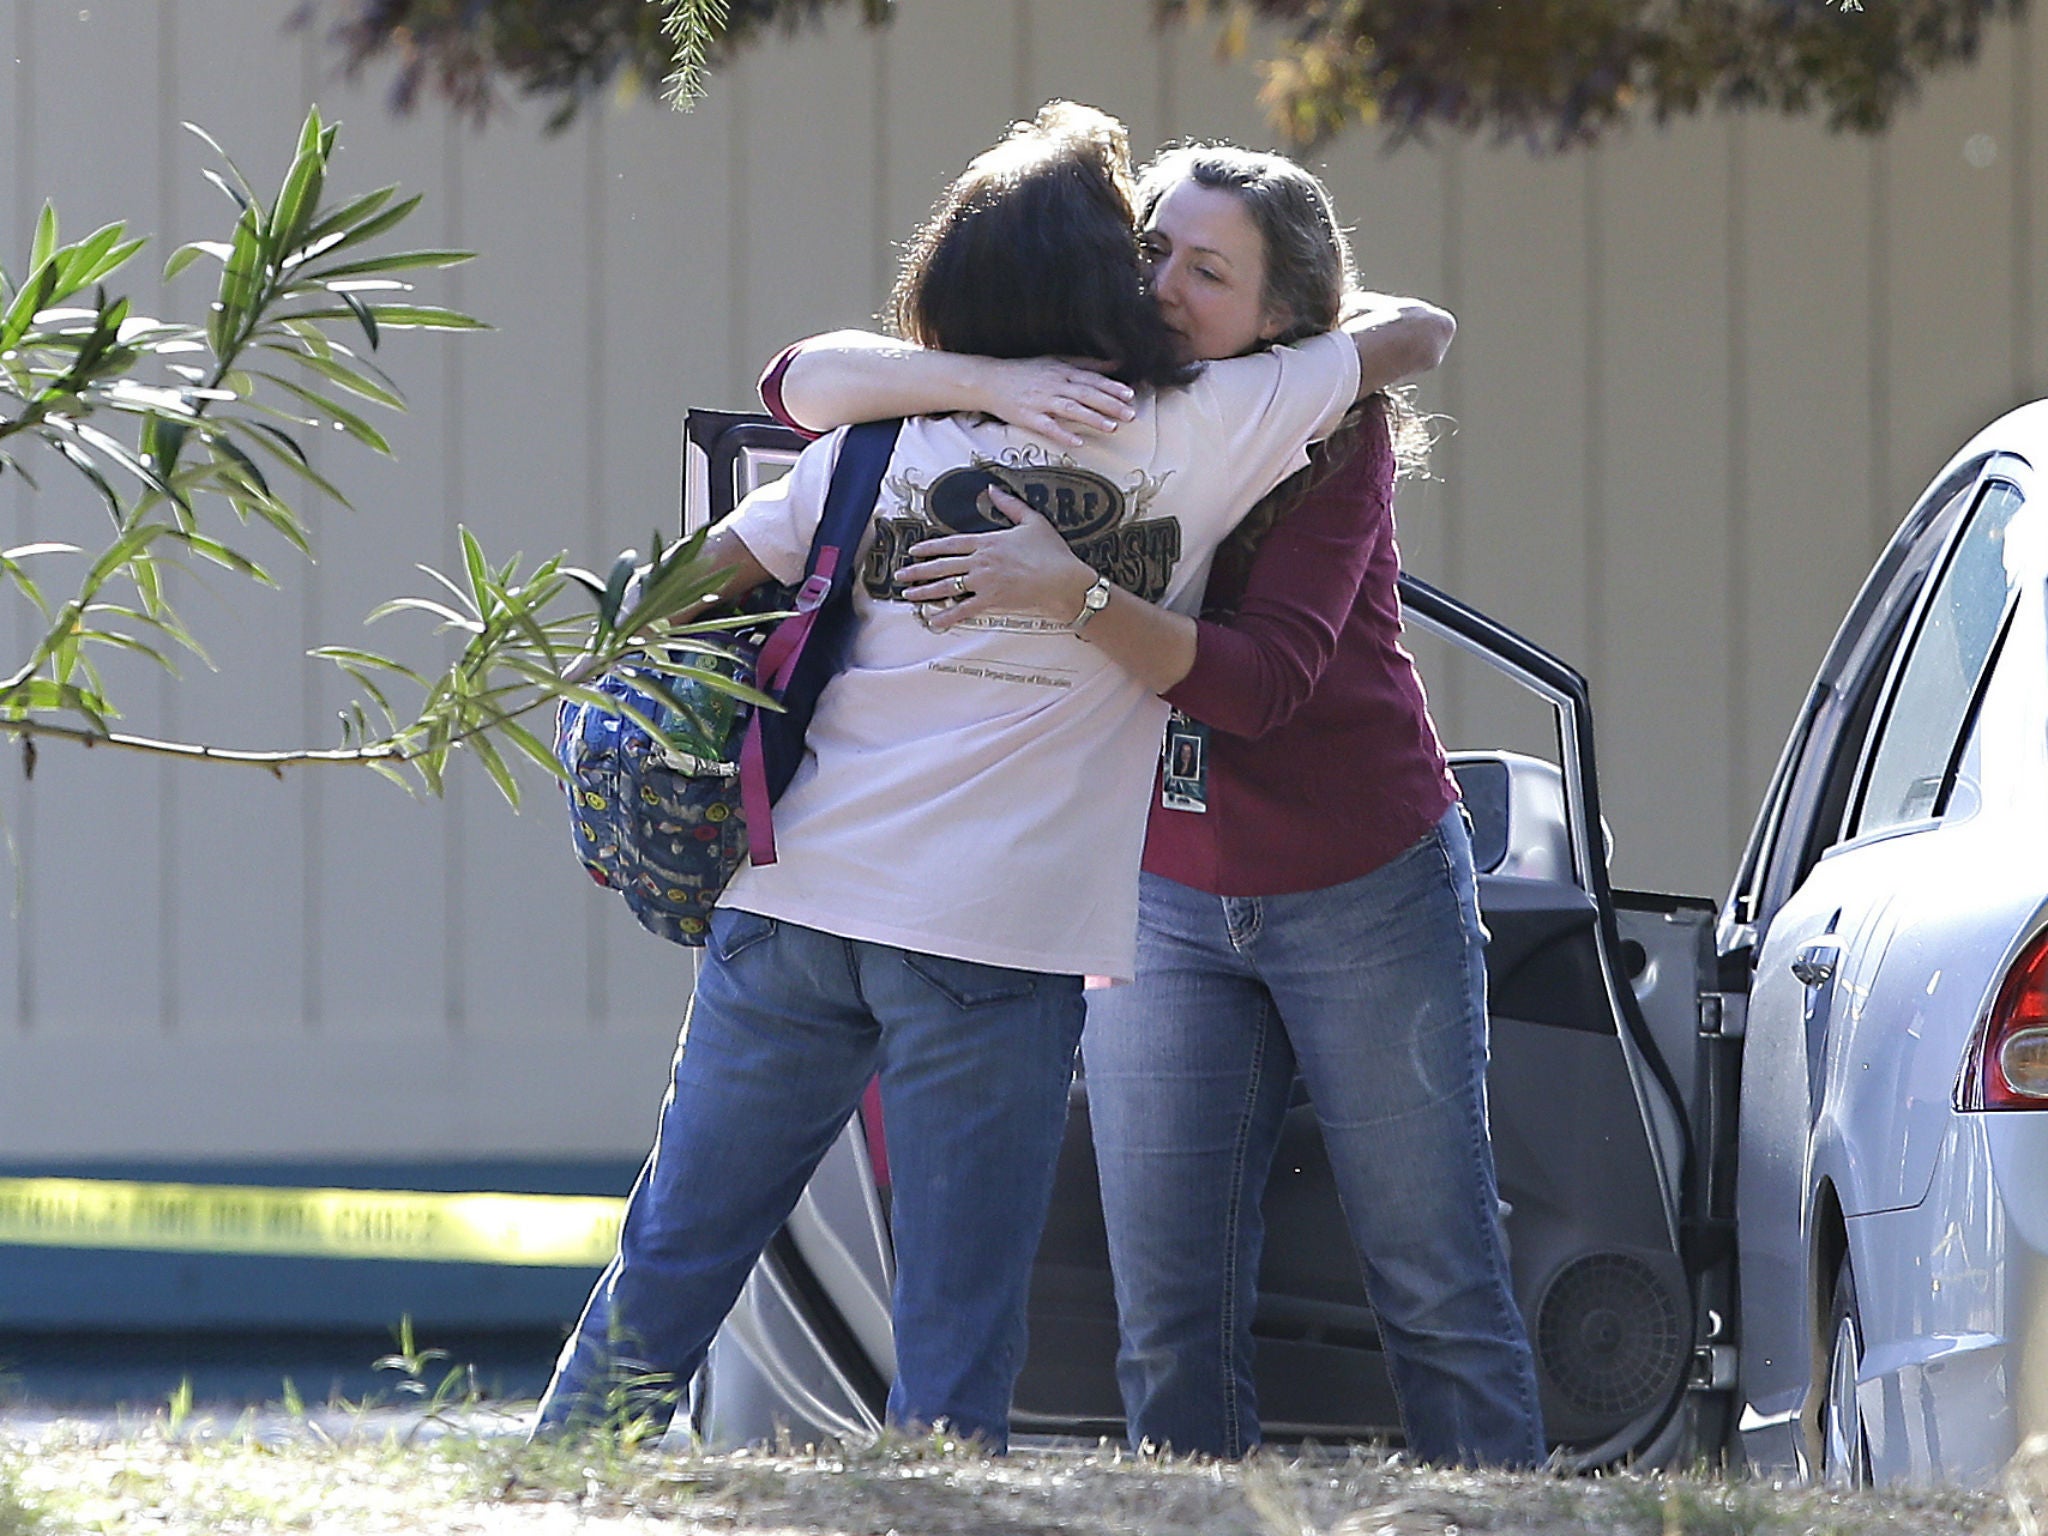 Two women embrace outside Rancho Tehama Elementary School, where a gunman opened fire Tuesday, Nov. 14, 2017, in Corning, California